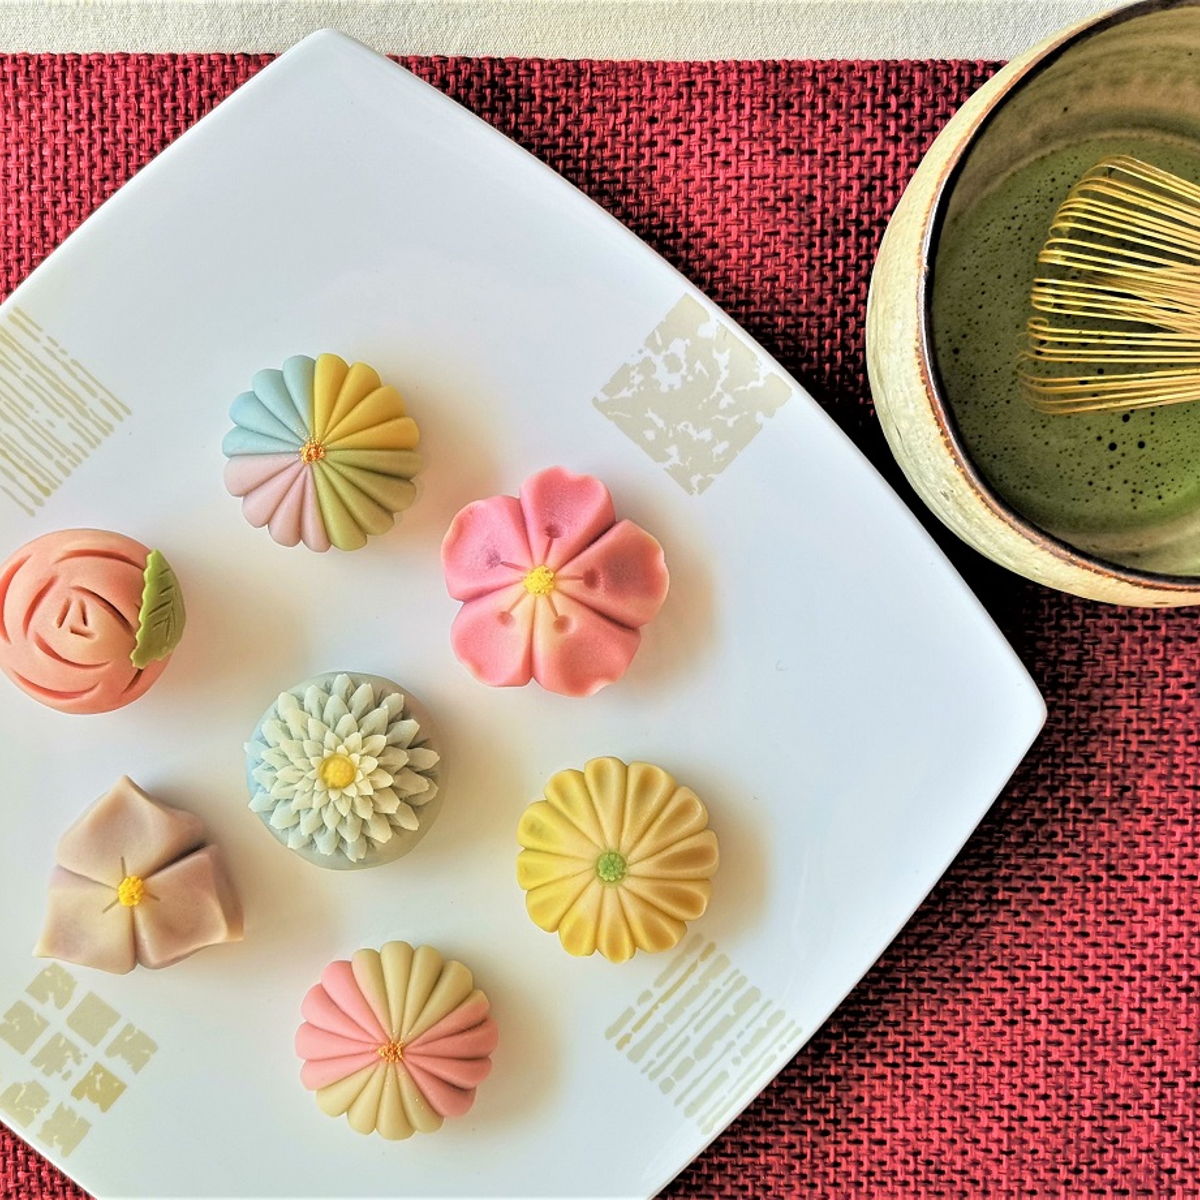 Traditional Japanese sweets & Matcha tea